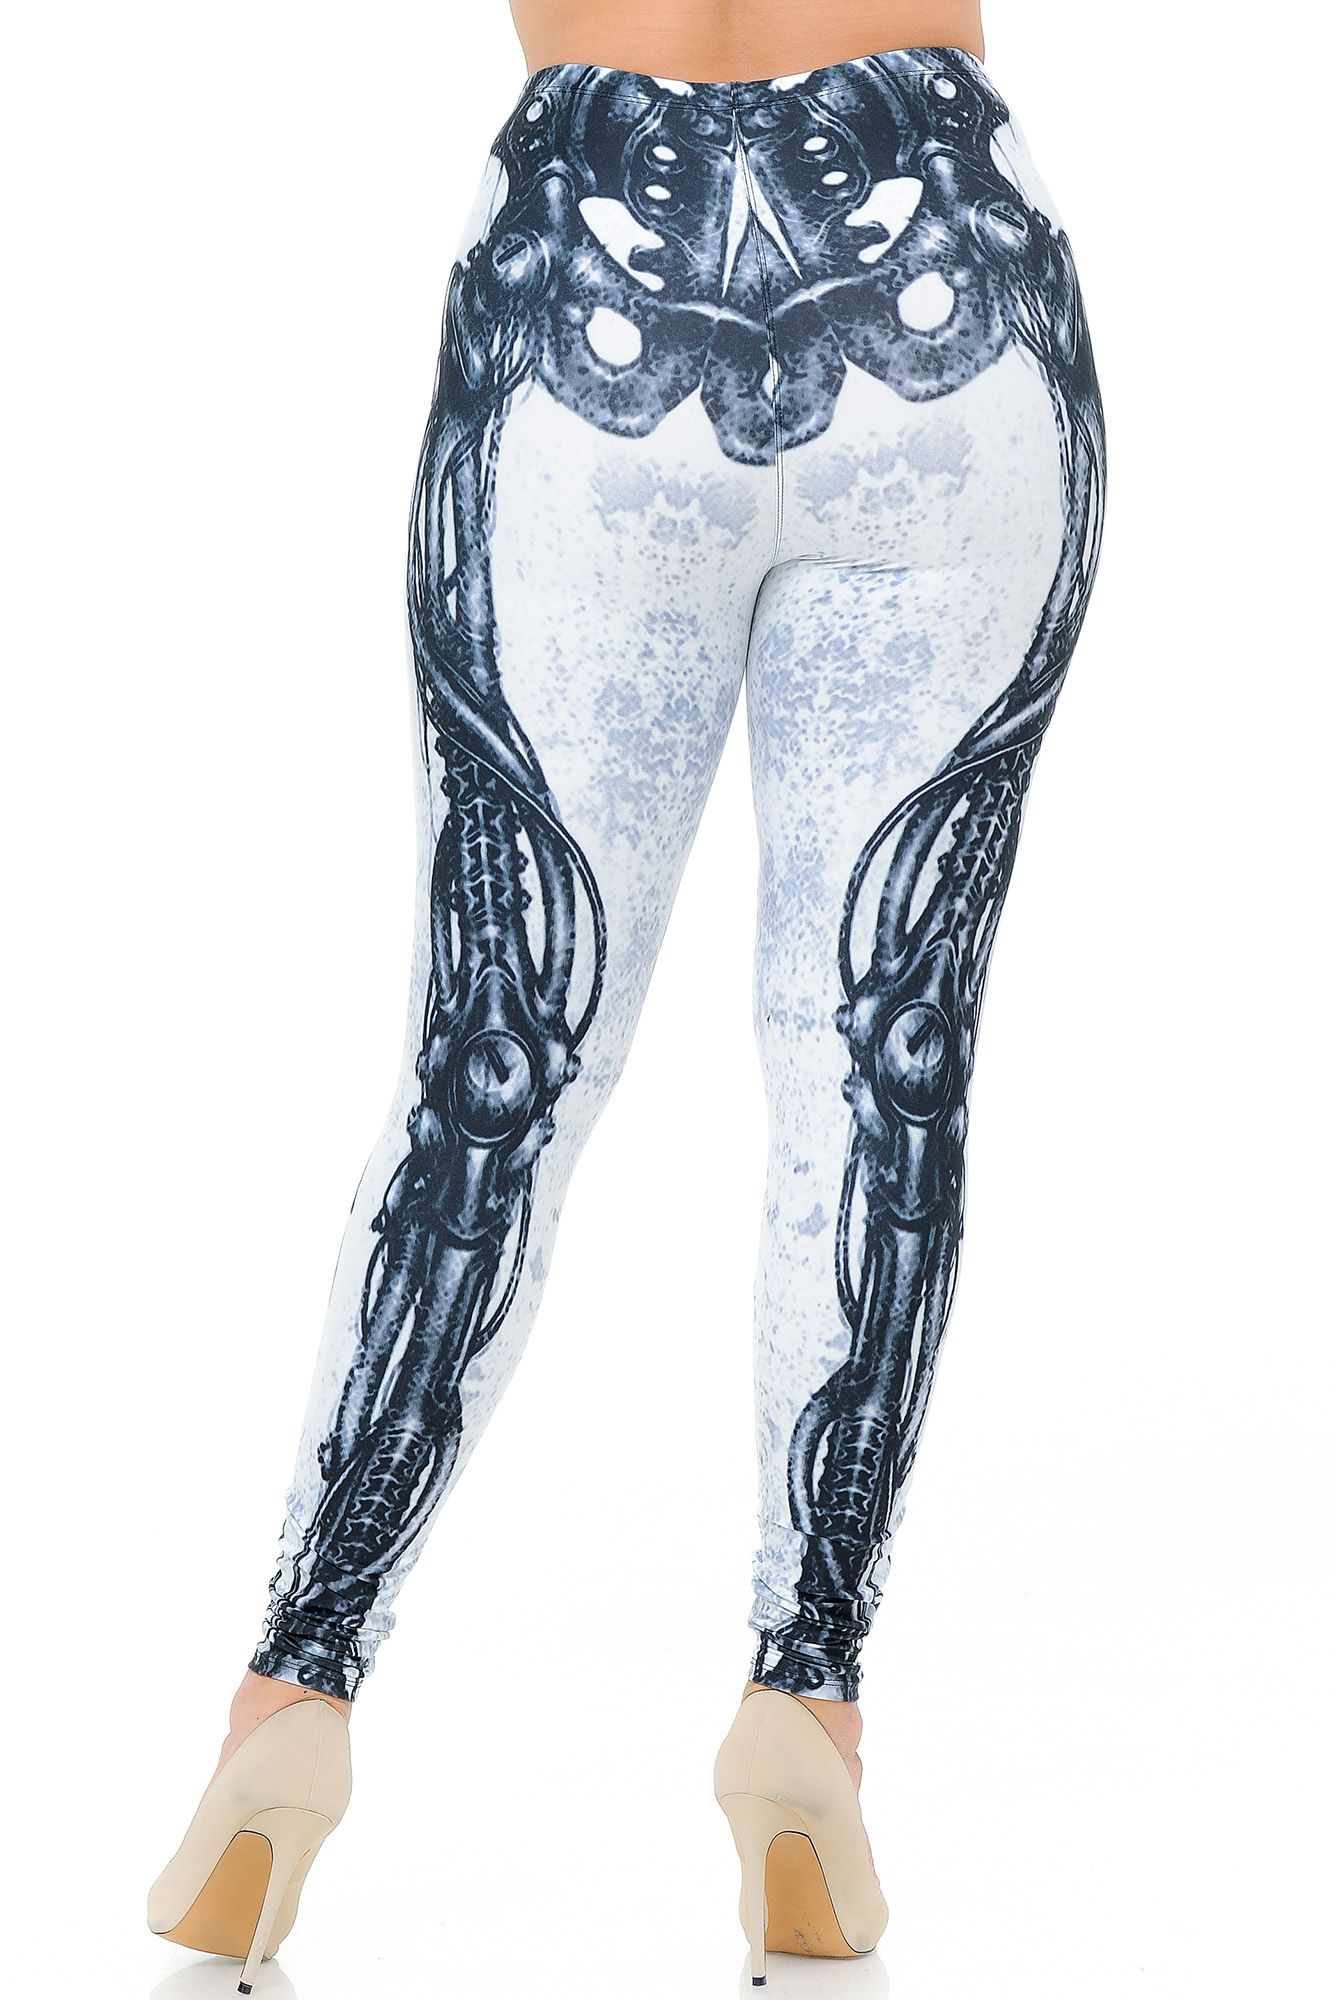 Wholesale Creamy Soft White Bio Mechanical Skeleton Extra Plus Size Leggings (Steam Punk) - 3X-5X - USA Fashion™